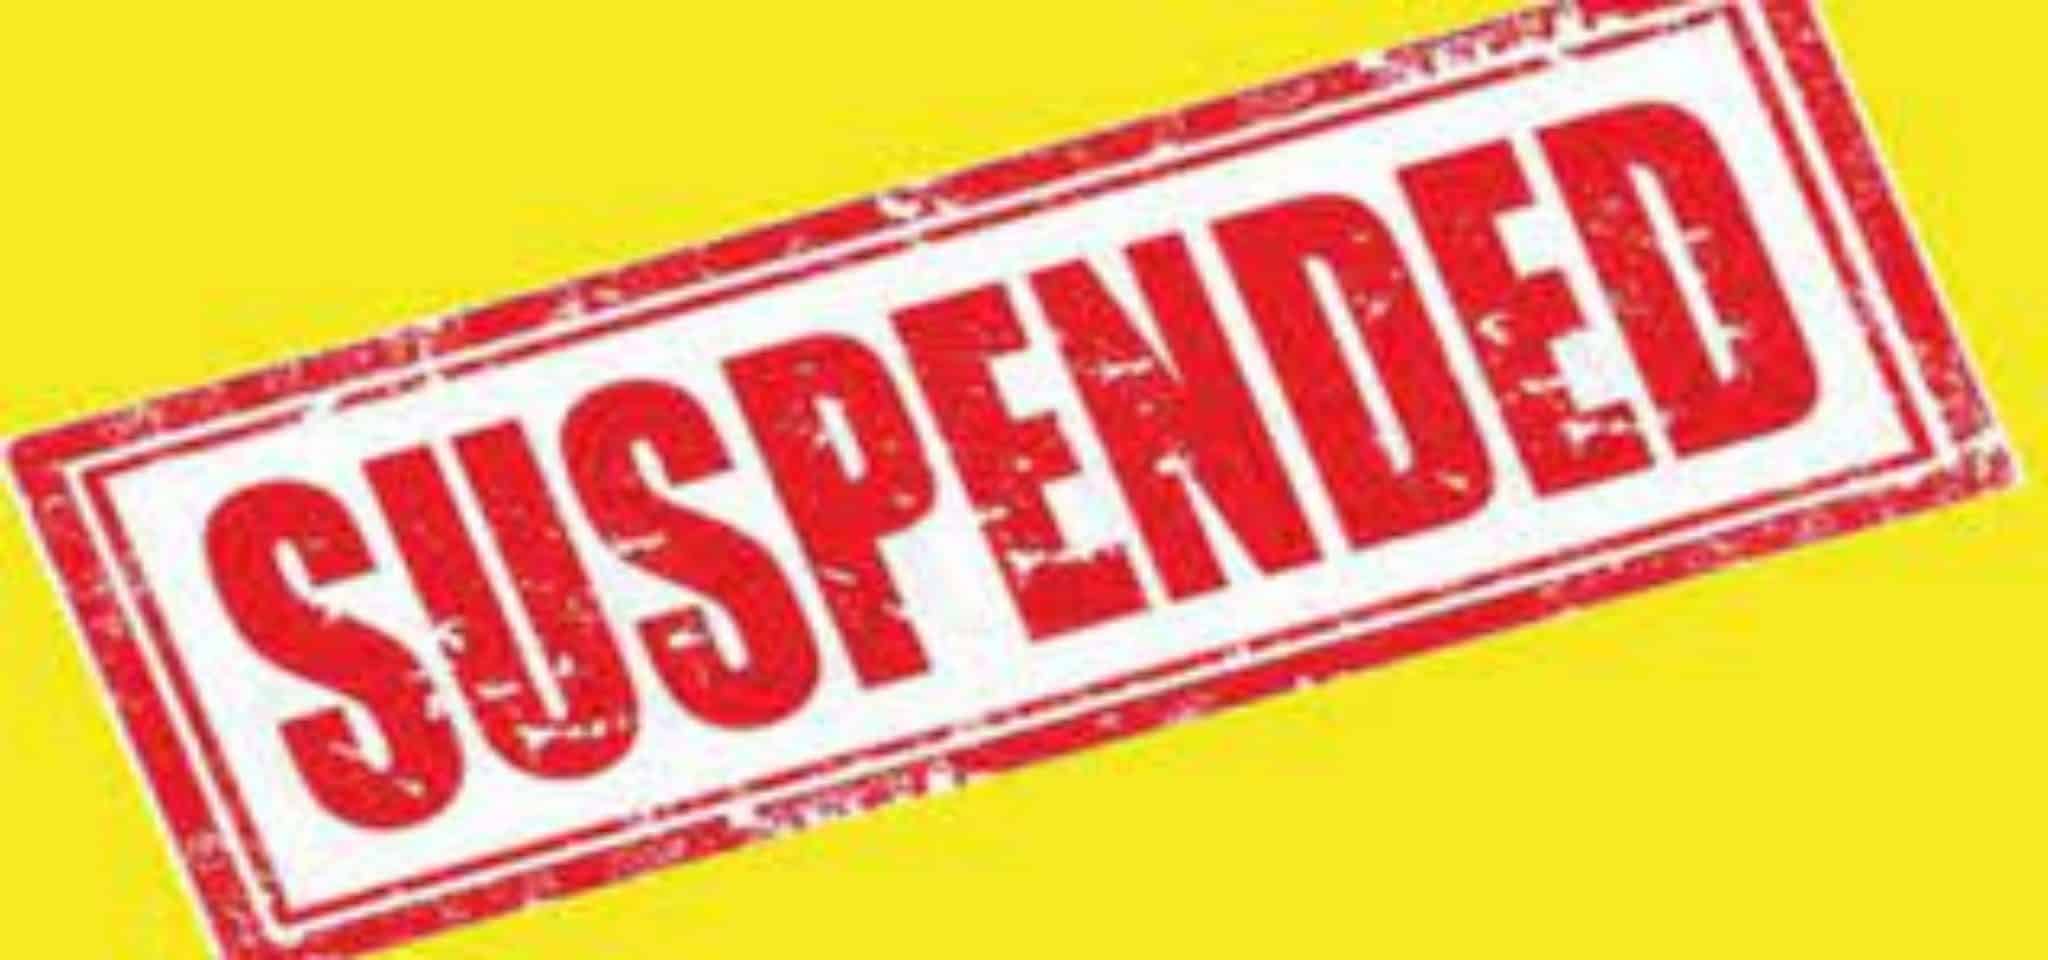 mp suspended notice